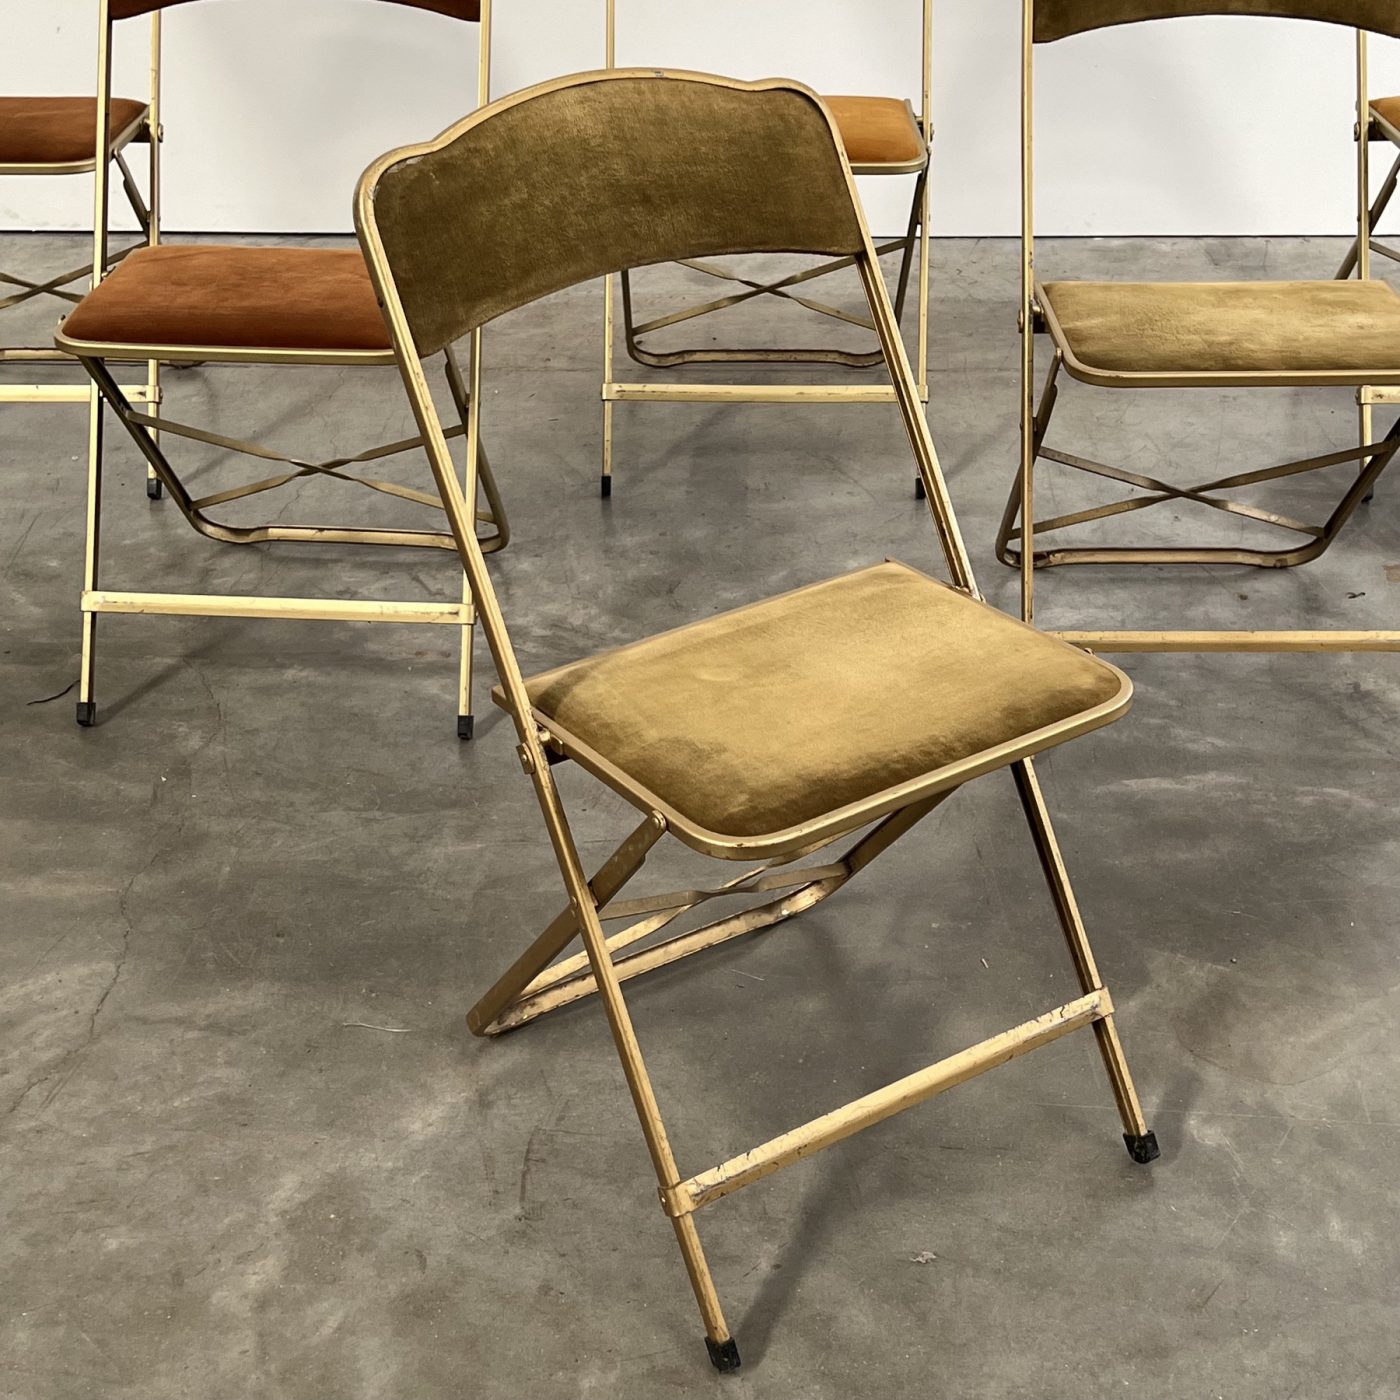 objet-vagabond-folding-chairs0005